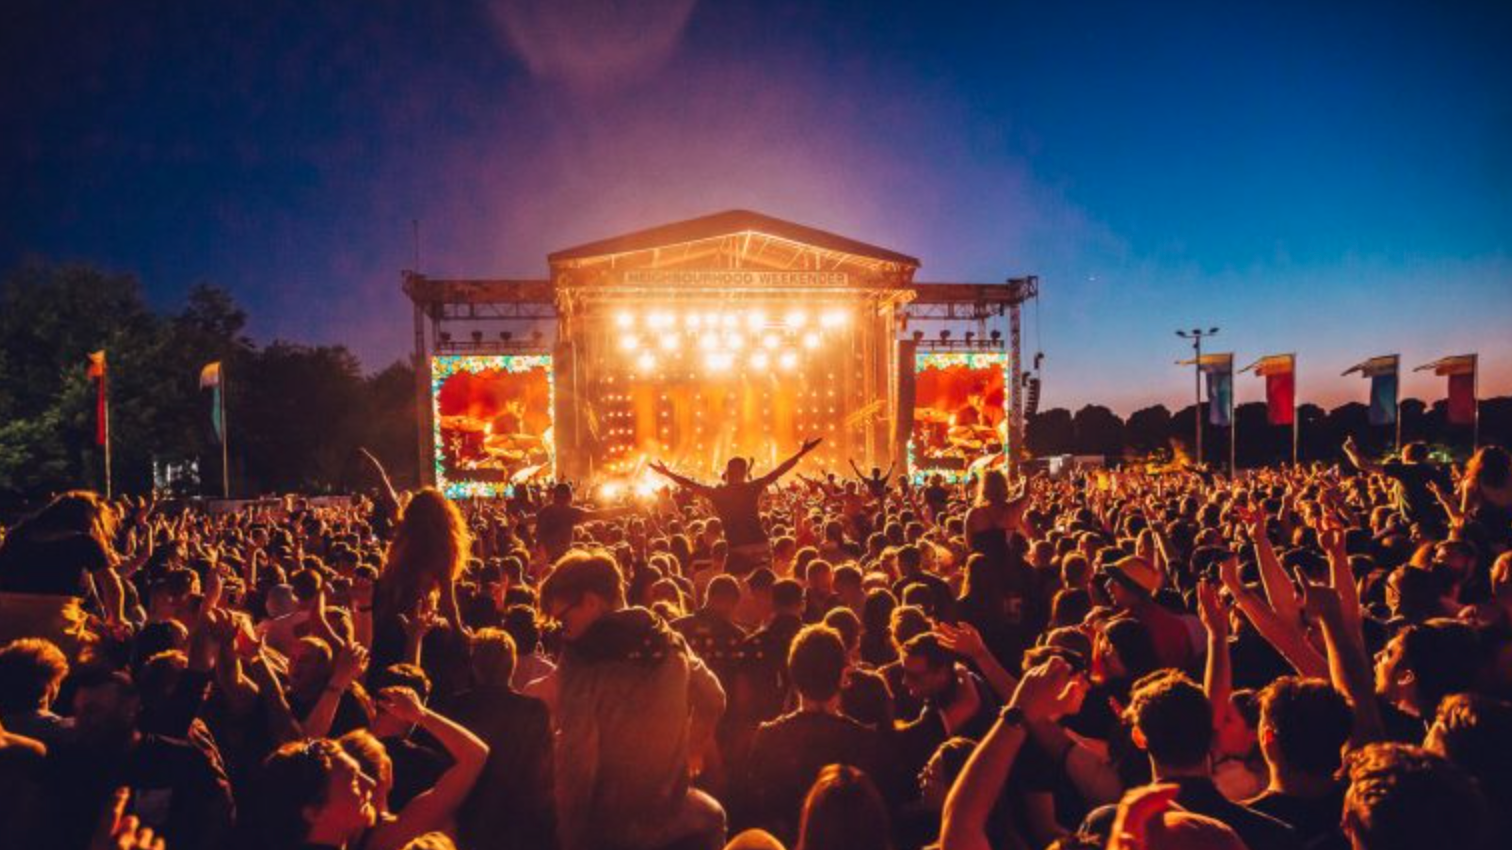 Warrington's Neighbourhood Weekender festival line-up revealed